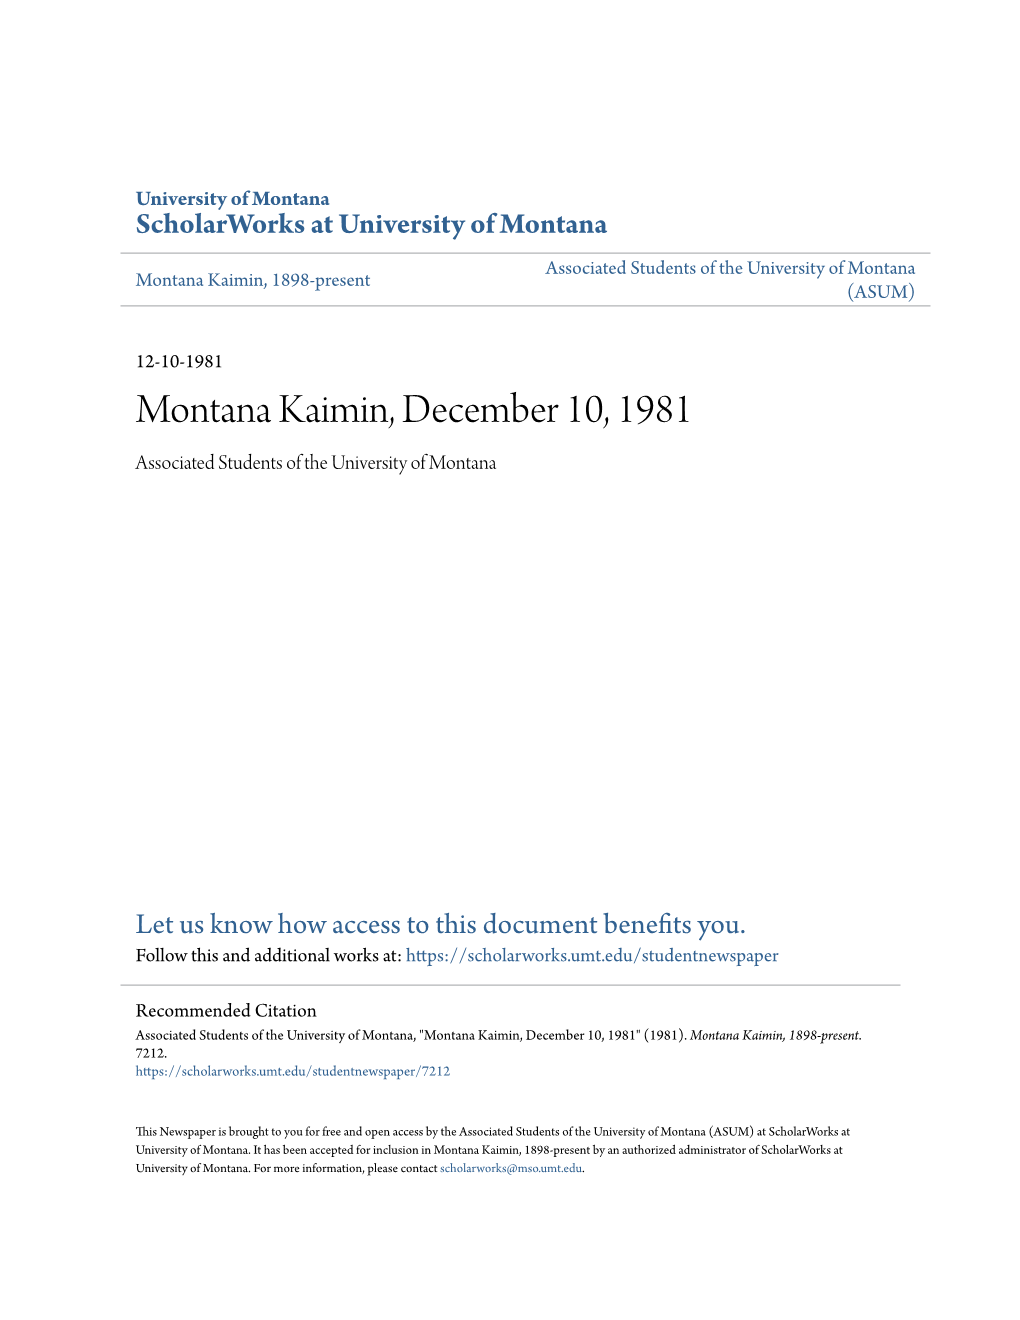 Montana Kaimin, December 10, 1981 Associated Students of the University of Montana